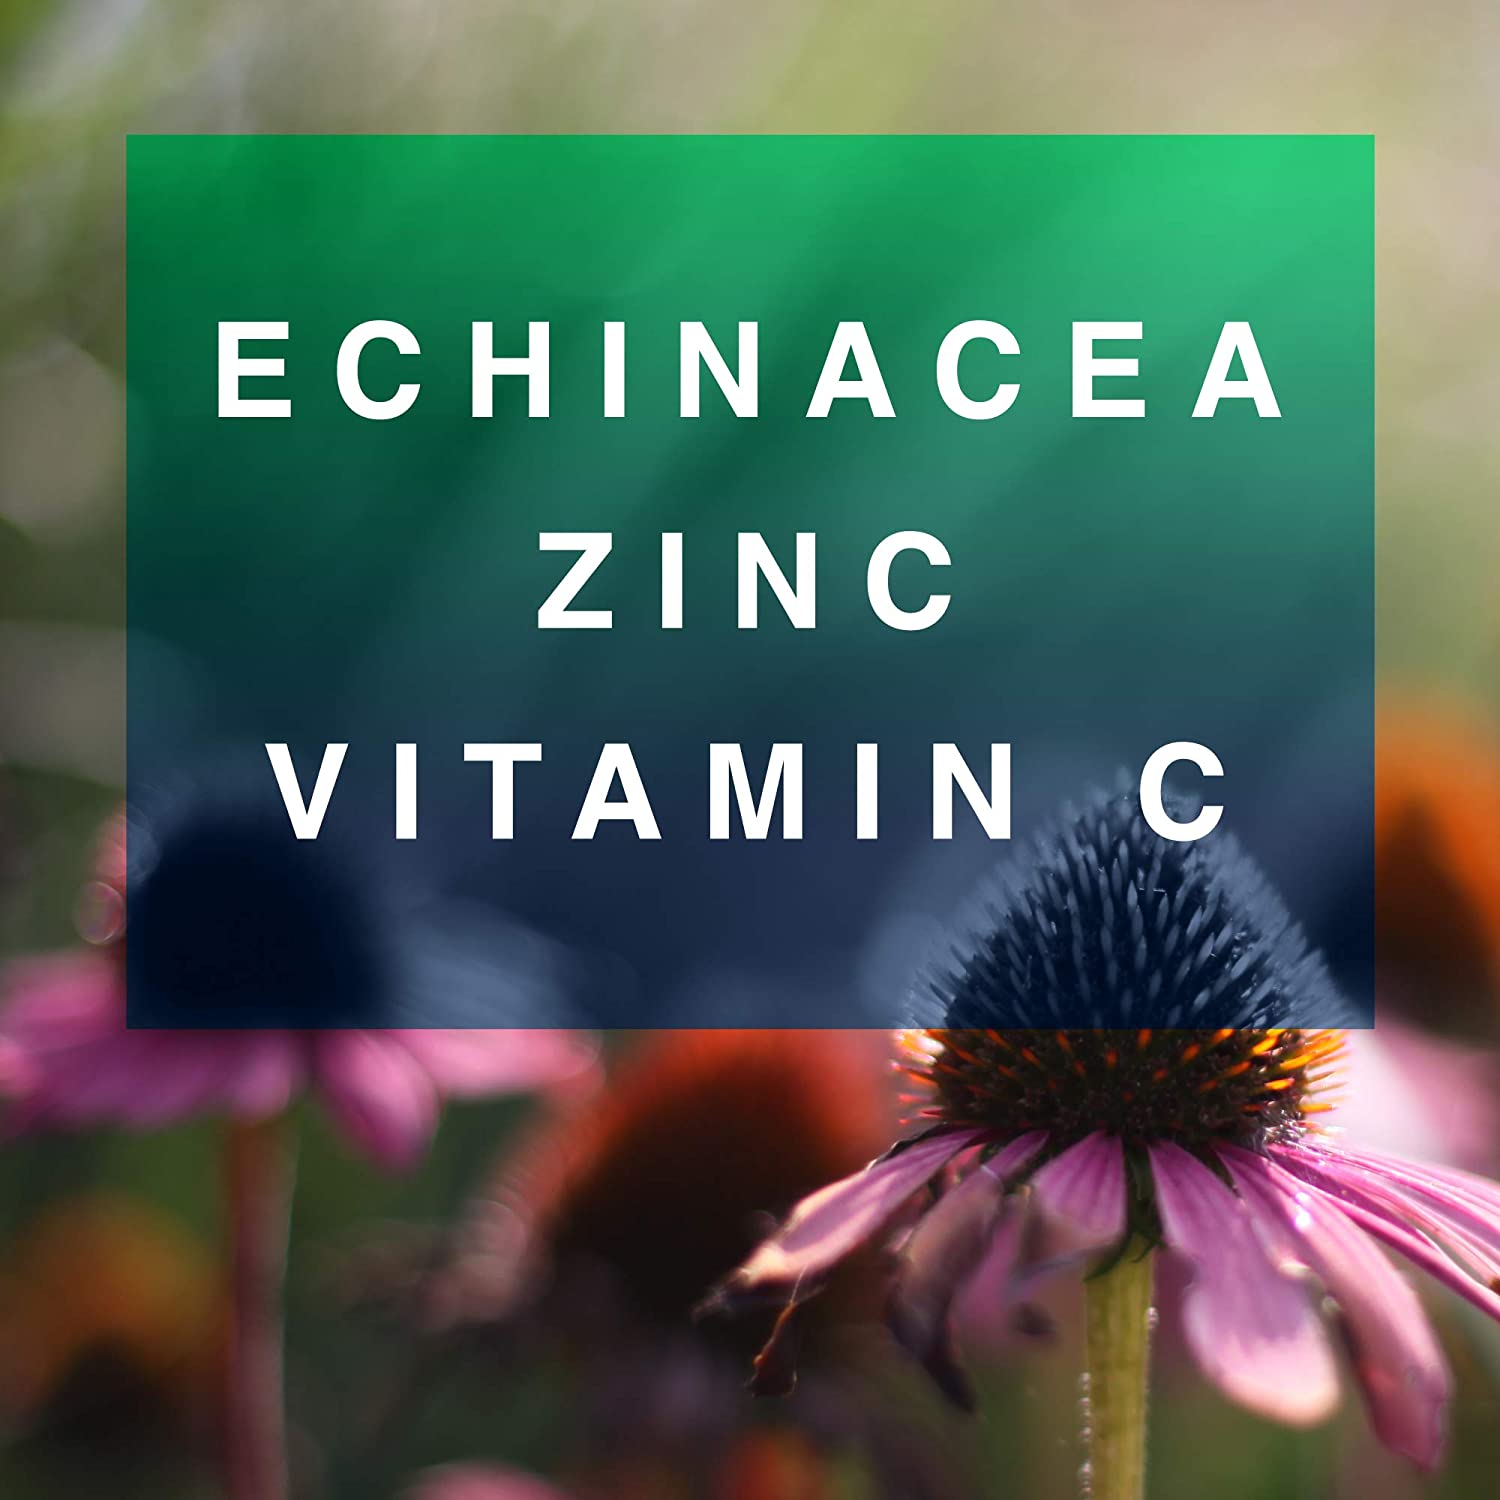 echinacea zinc vitamin c with echinacea coneflowers in background